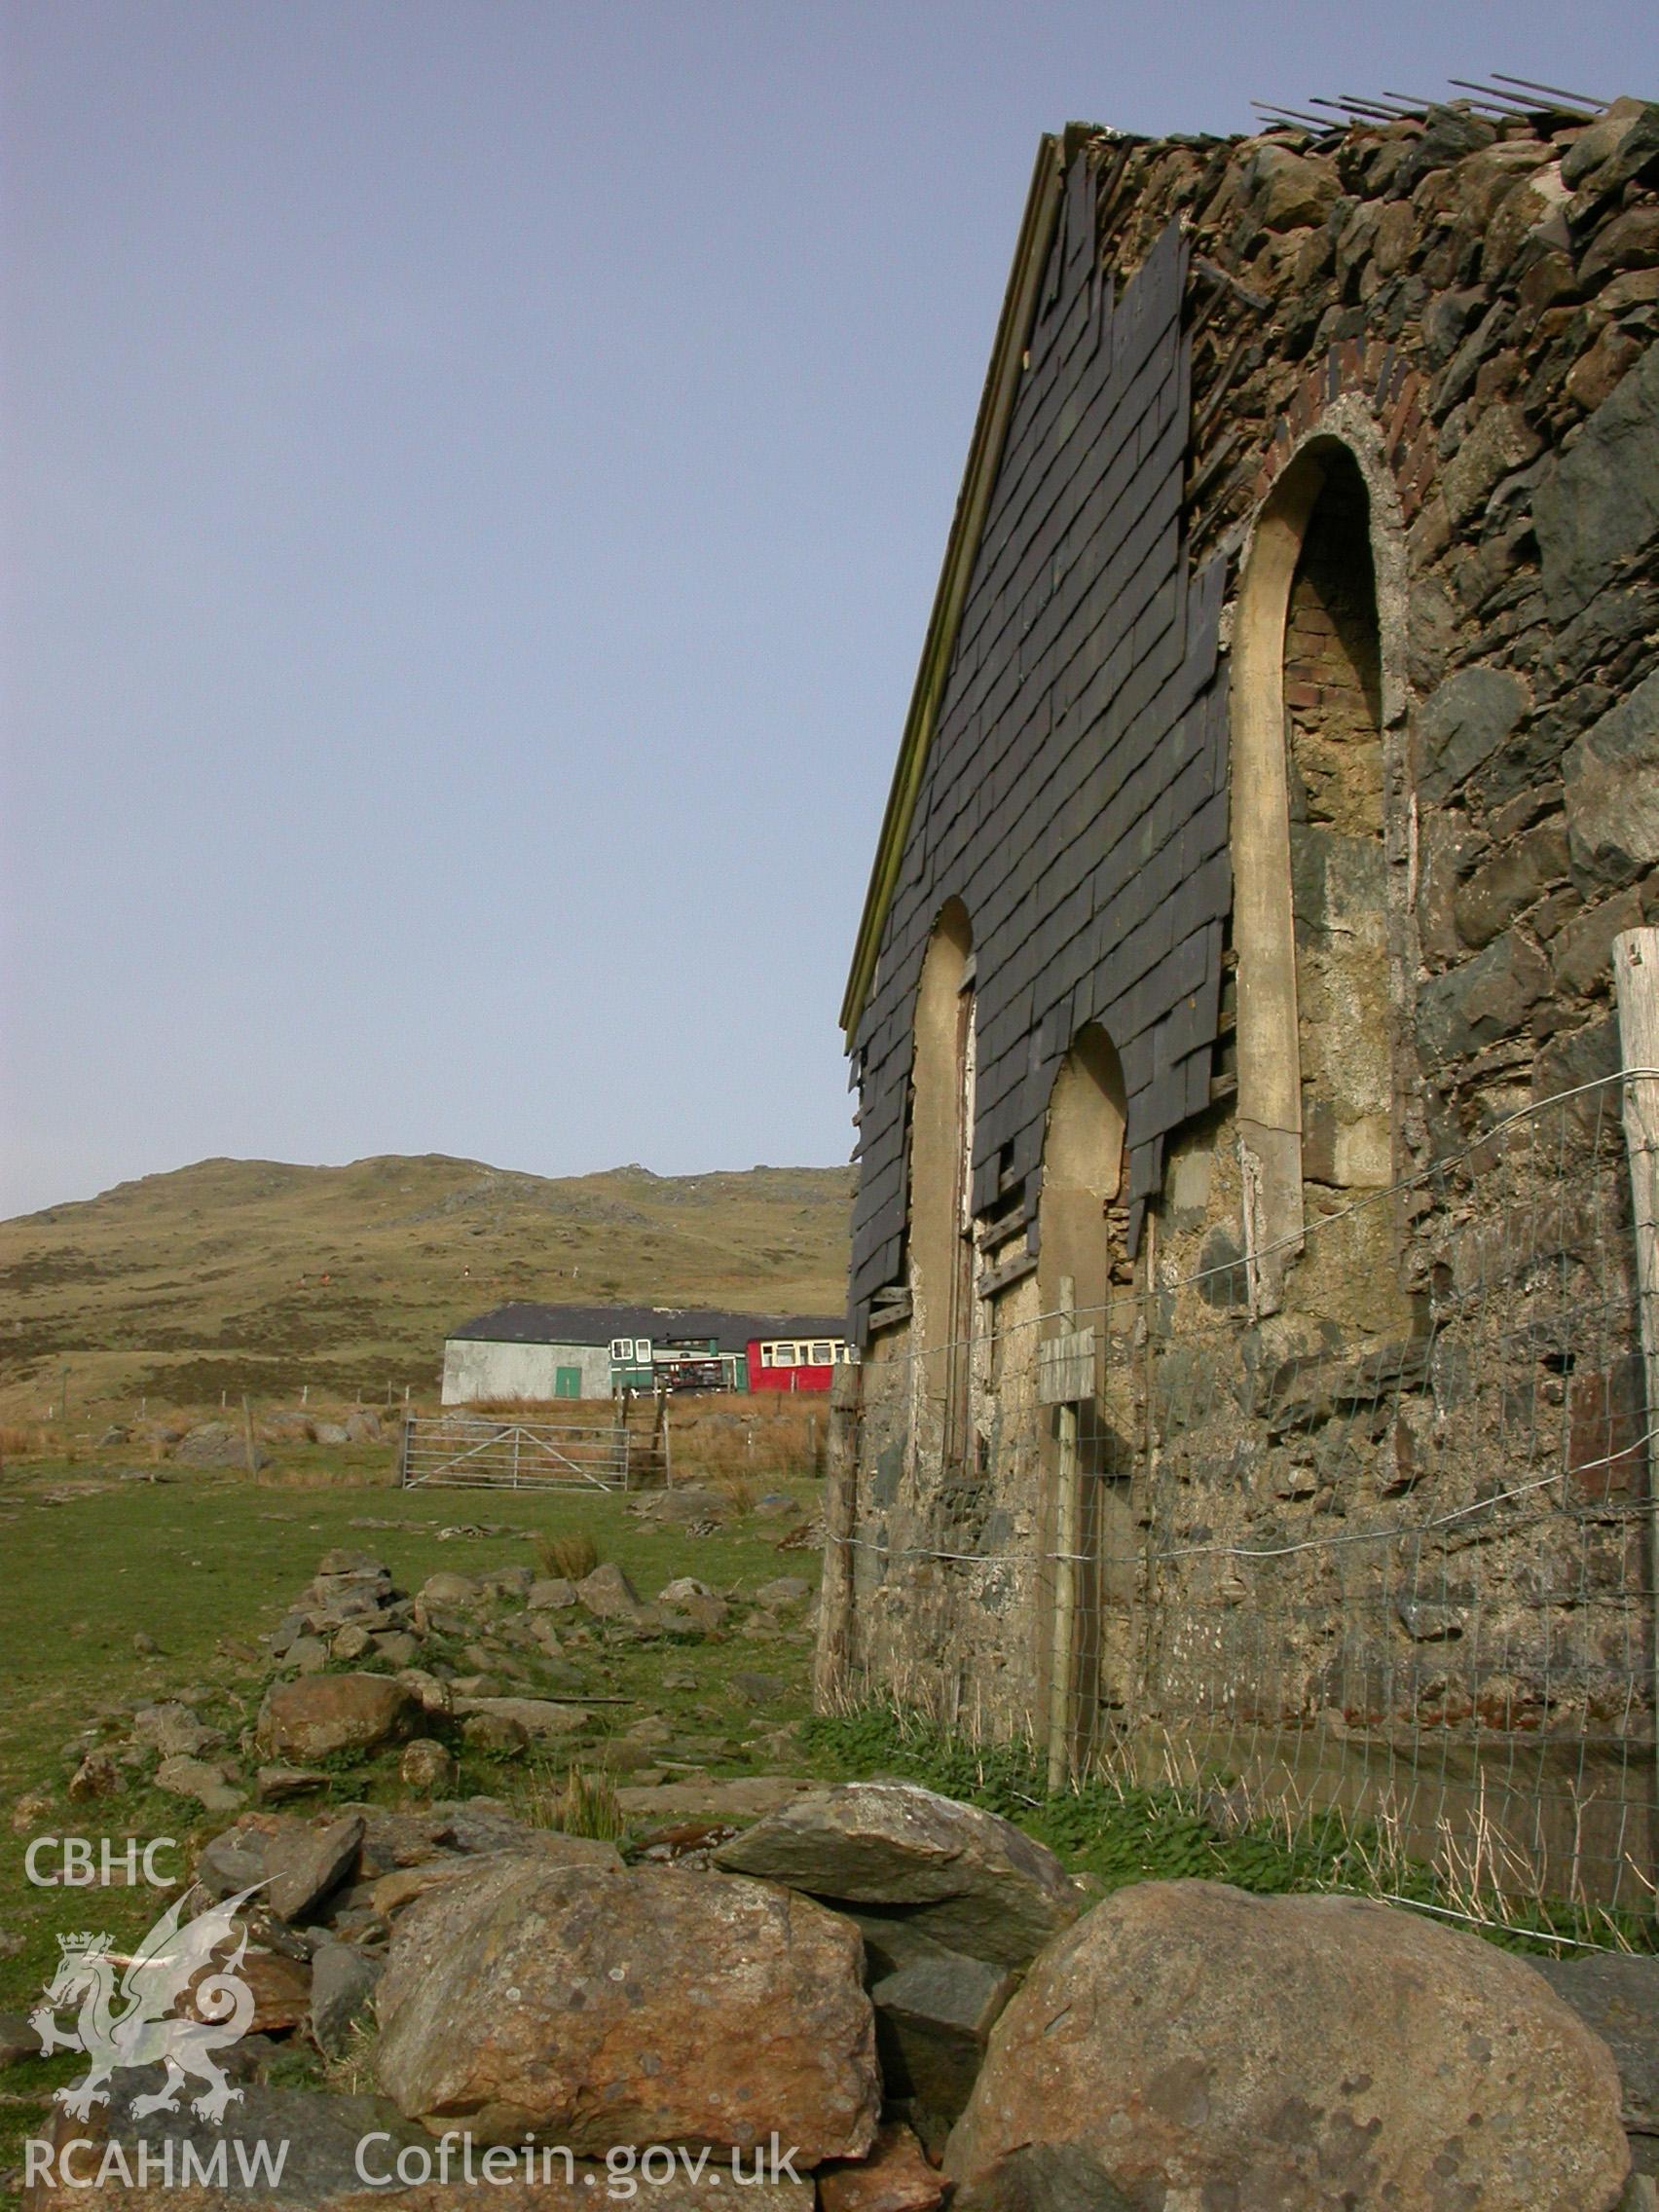 Exterior, Chapel front & mountain railway